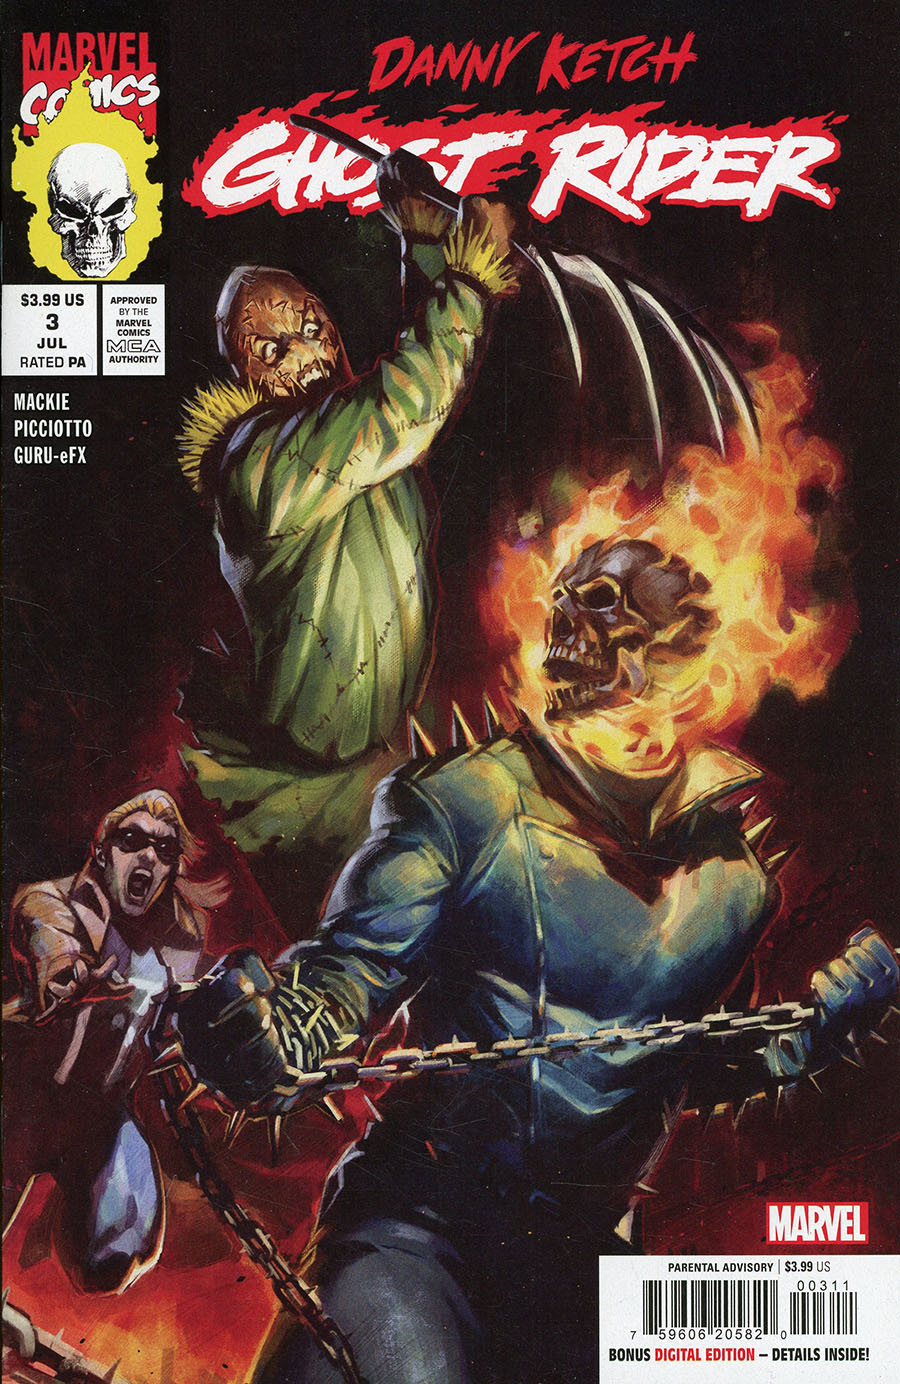 Danny Ketch Ghost Rider #3 Cover A Regular Ben Harvey Cover